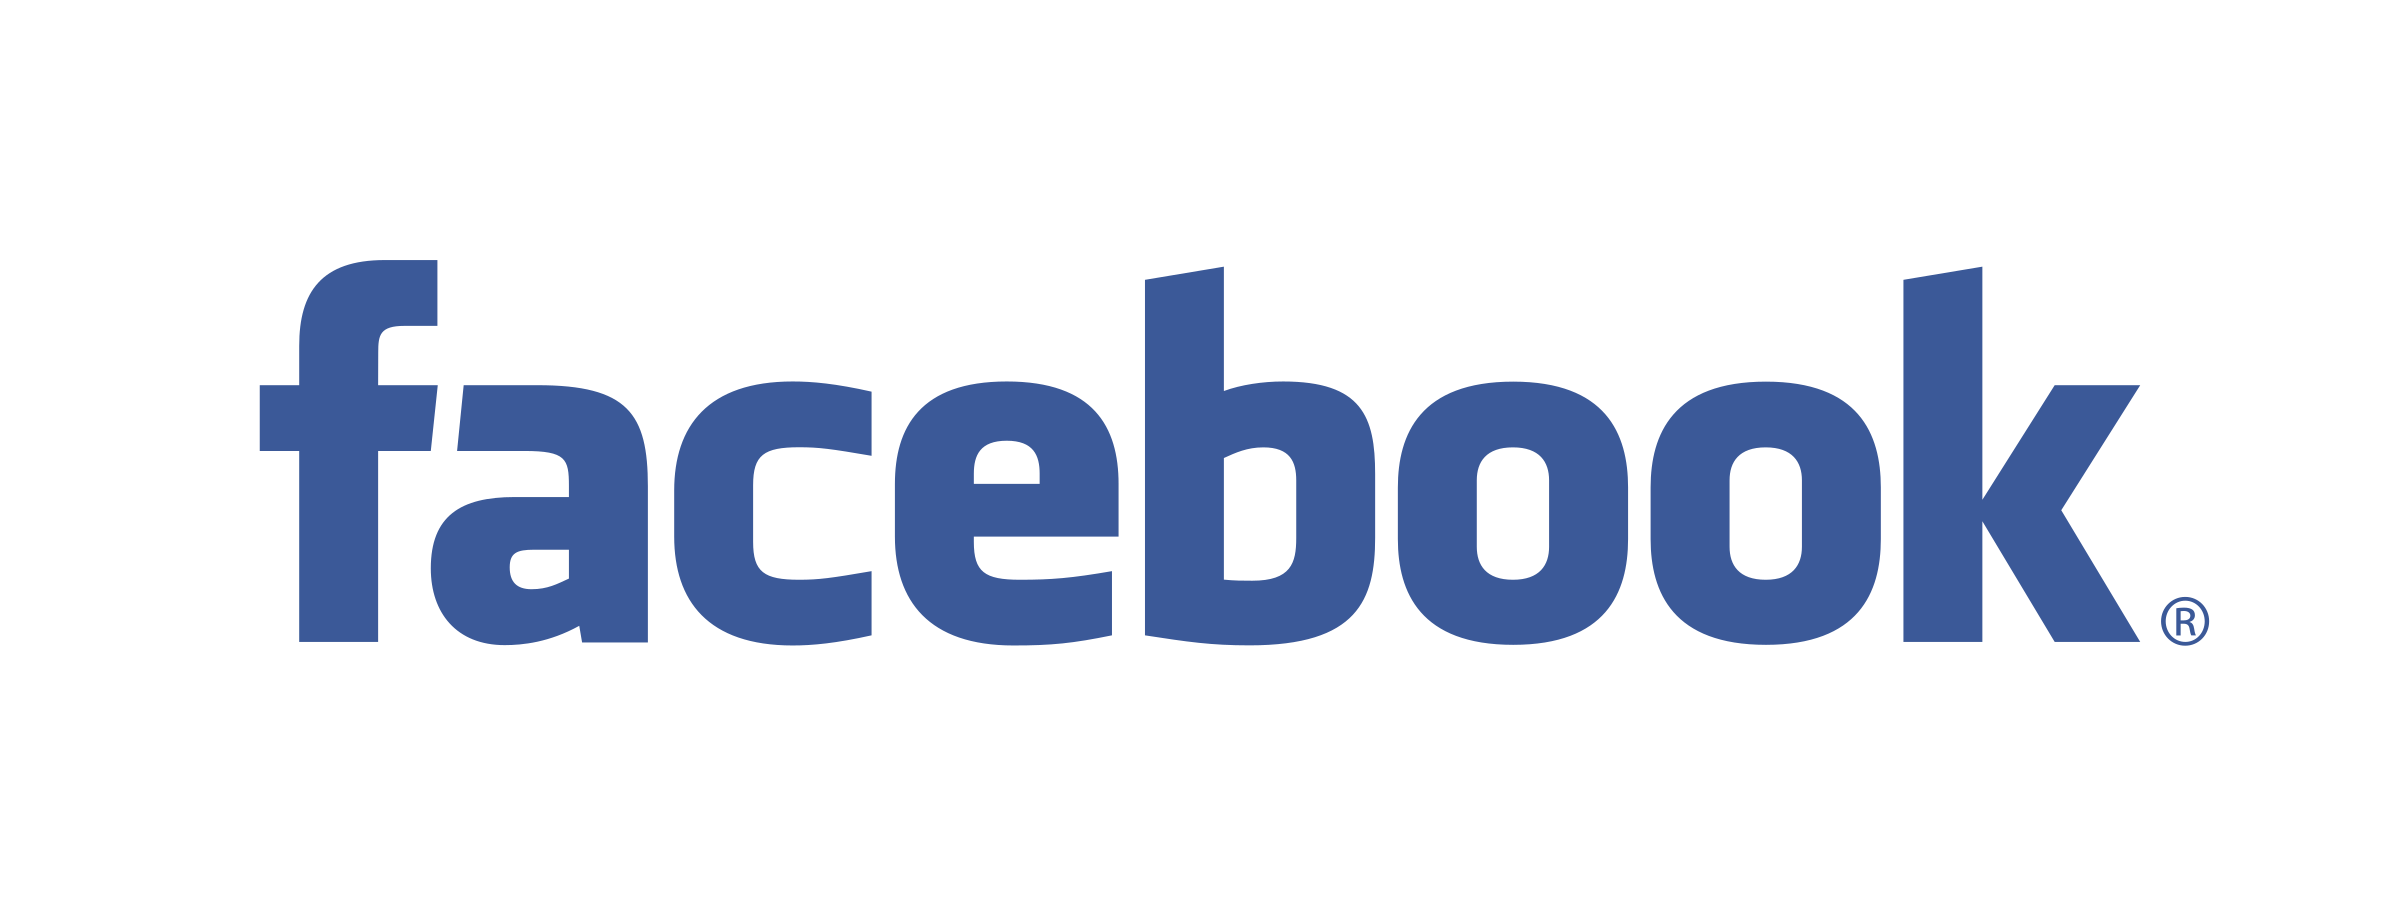 facebook-1-logo-png-transparent.png